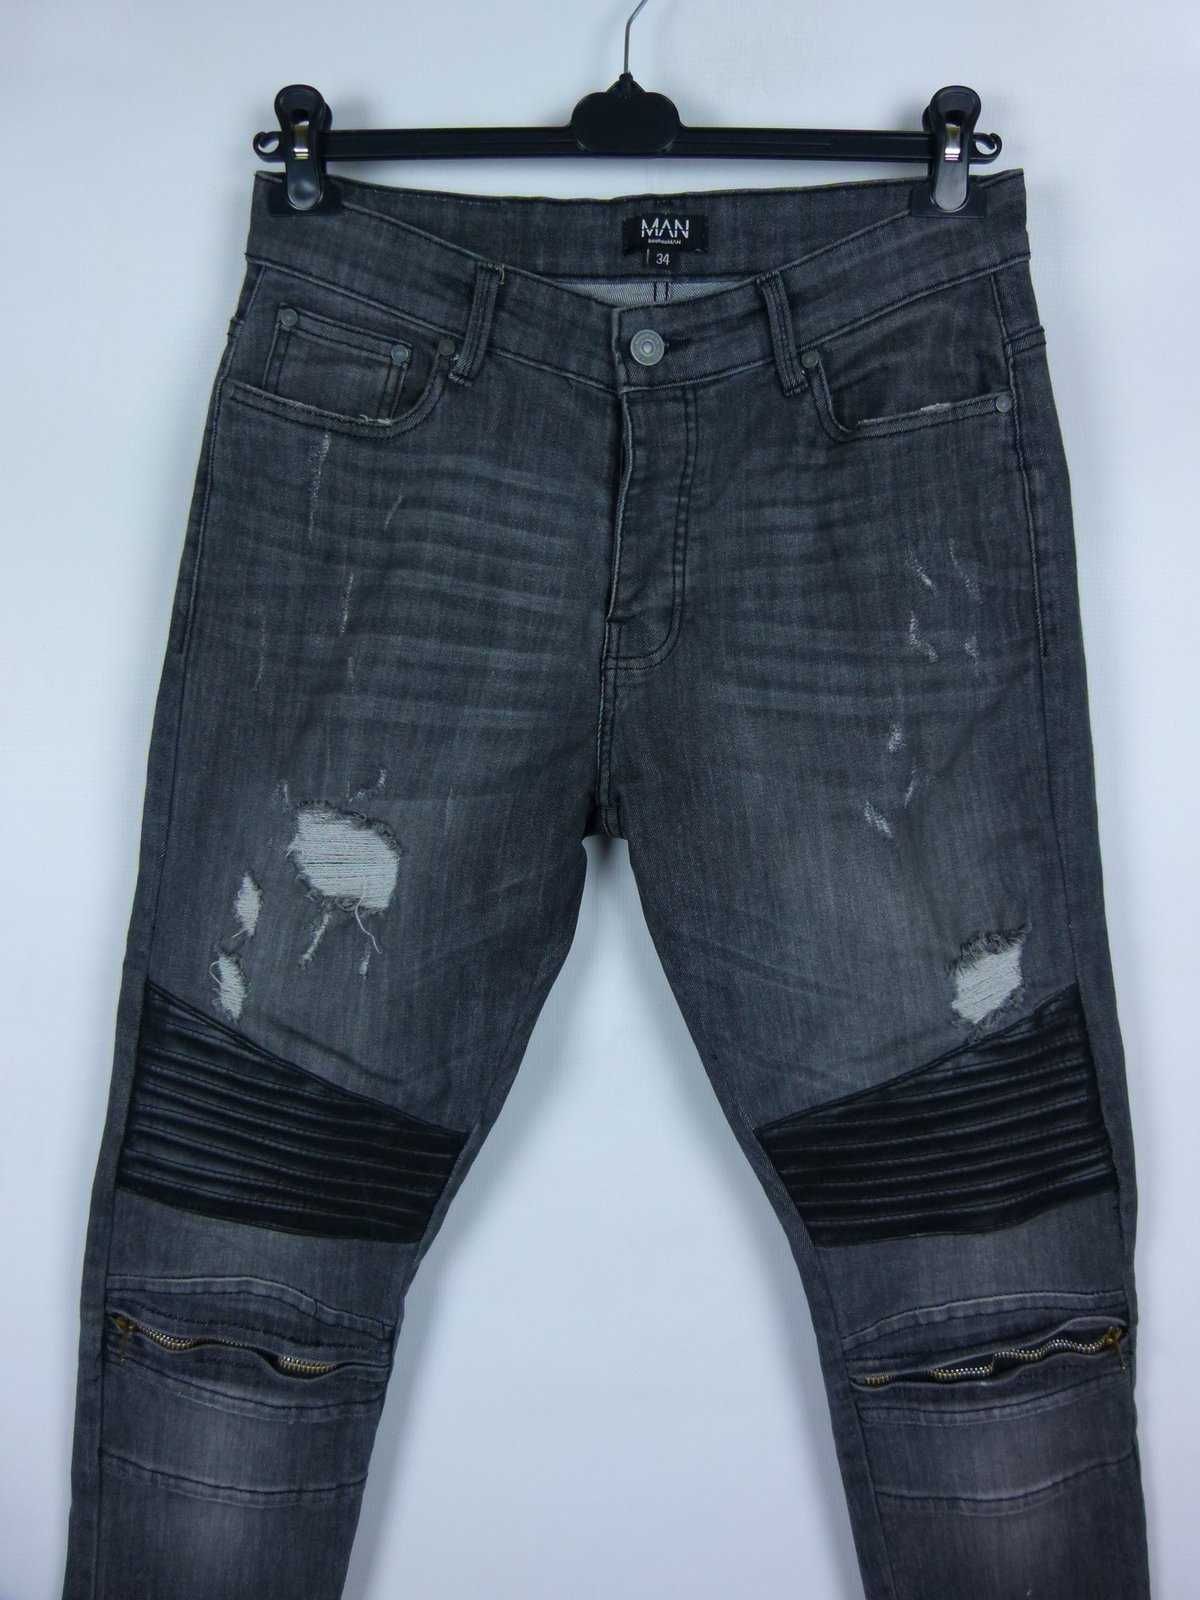 BOOHOO Man spodnie jeans przetarcia / 34 regular